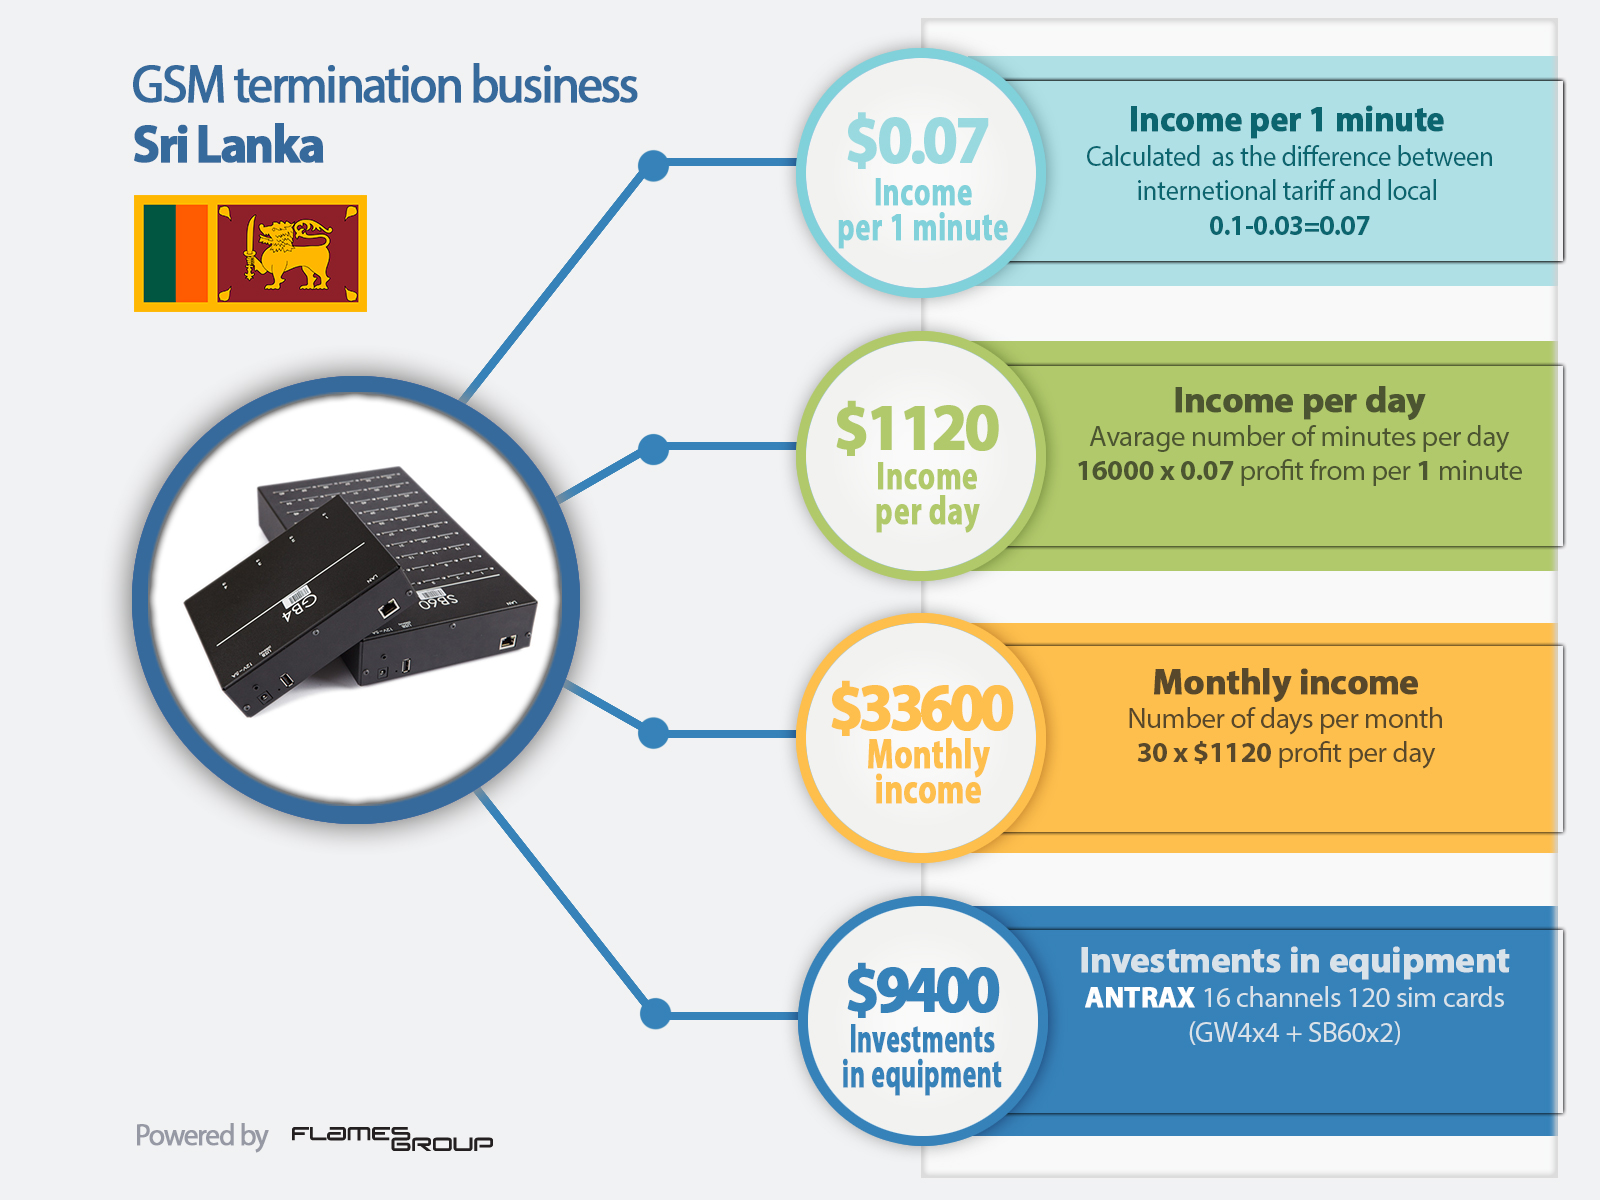 GSM termination in Sri Lanka - Infographic ANTRAX